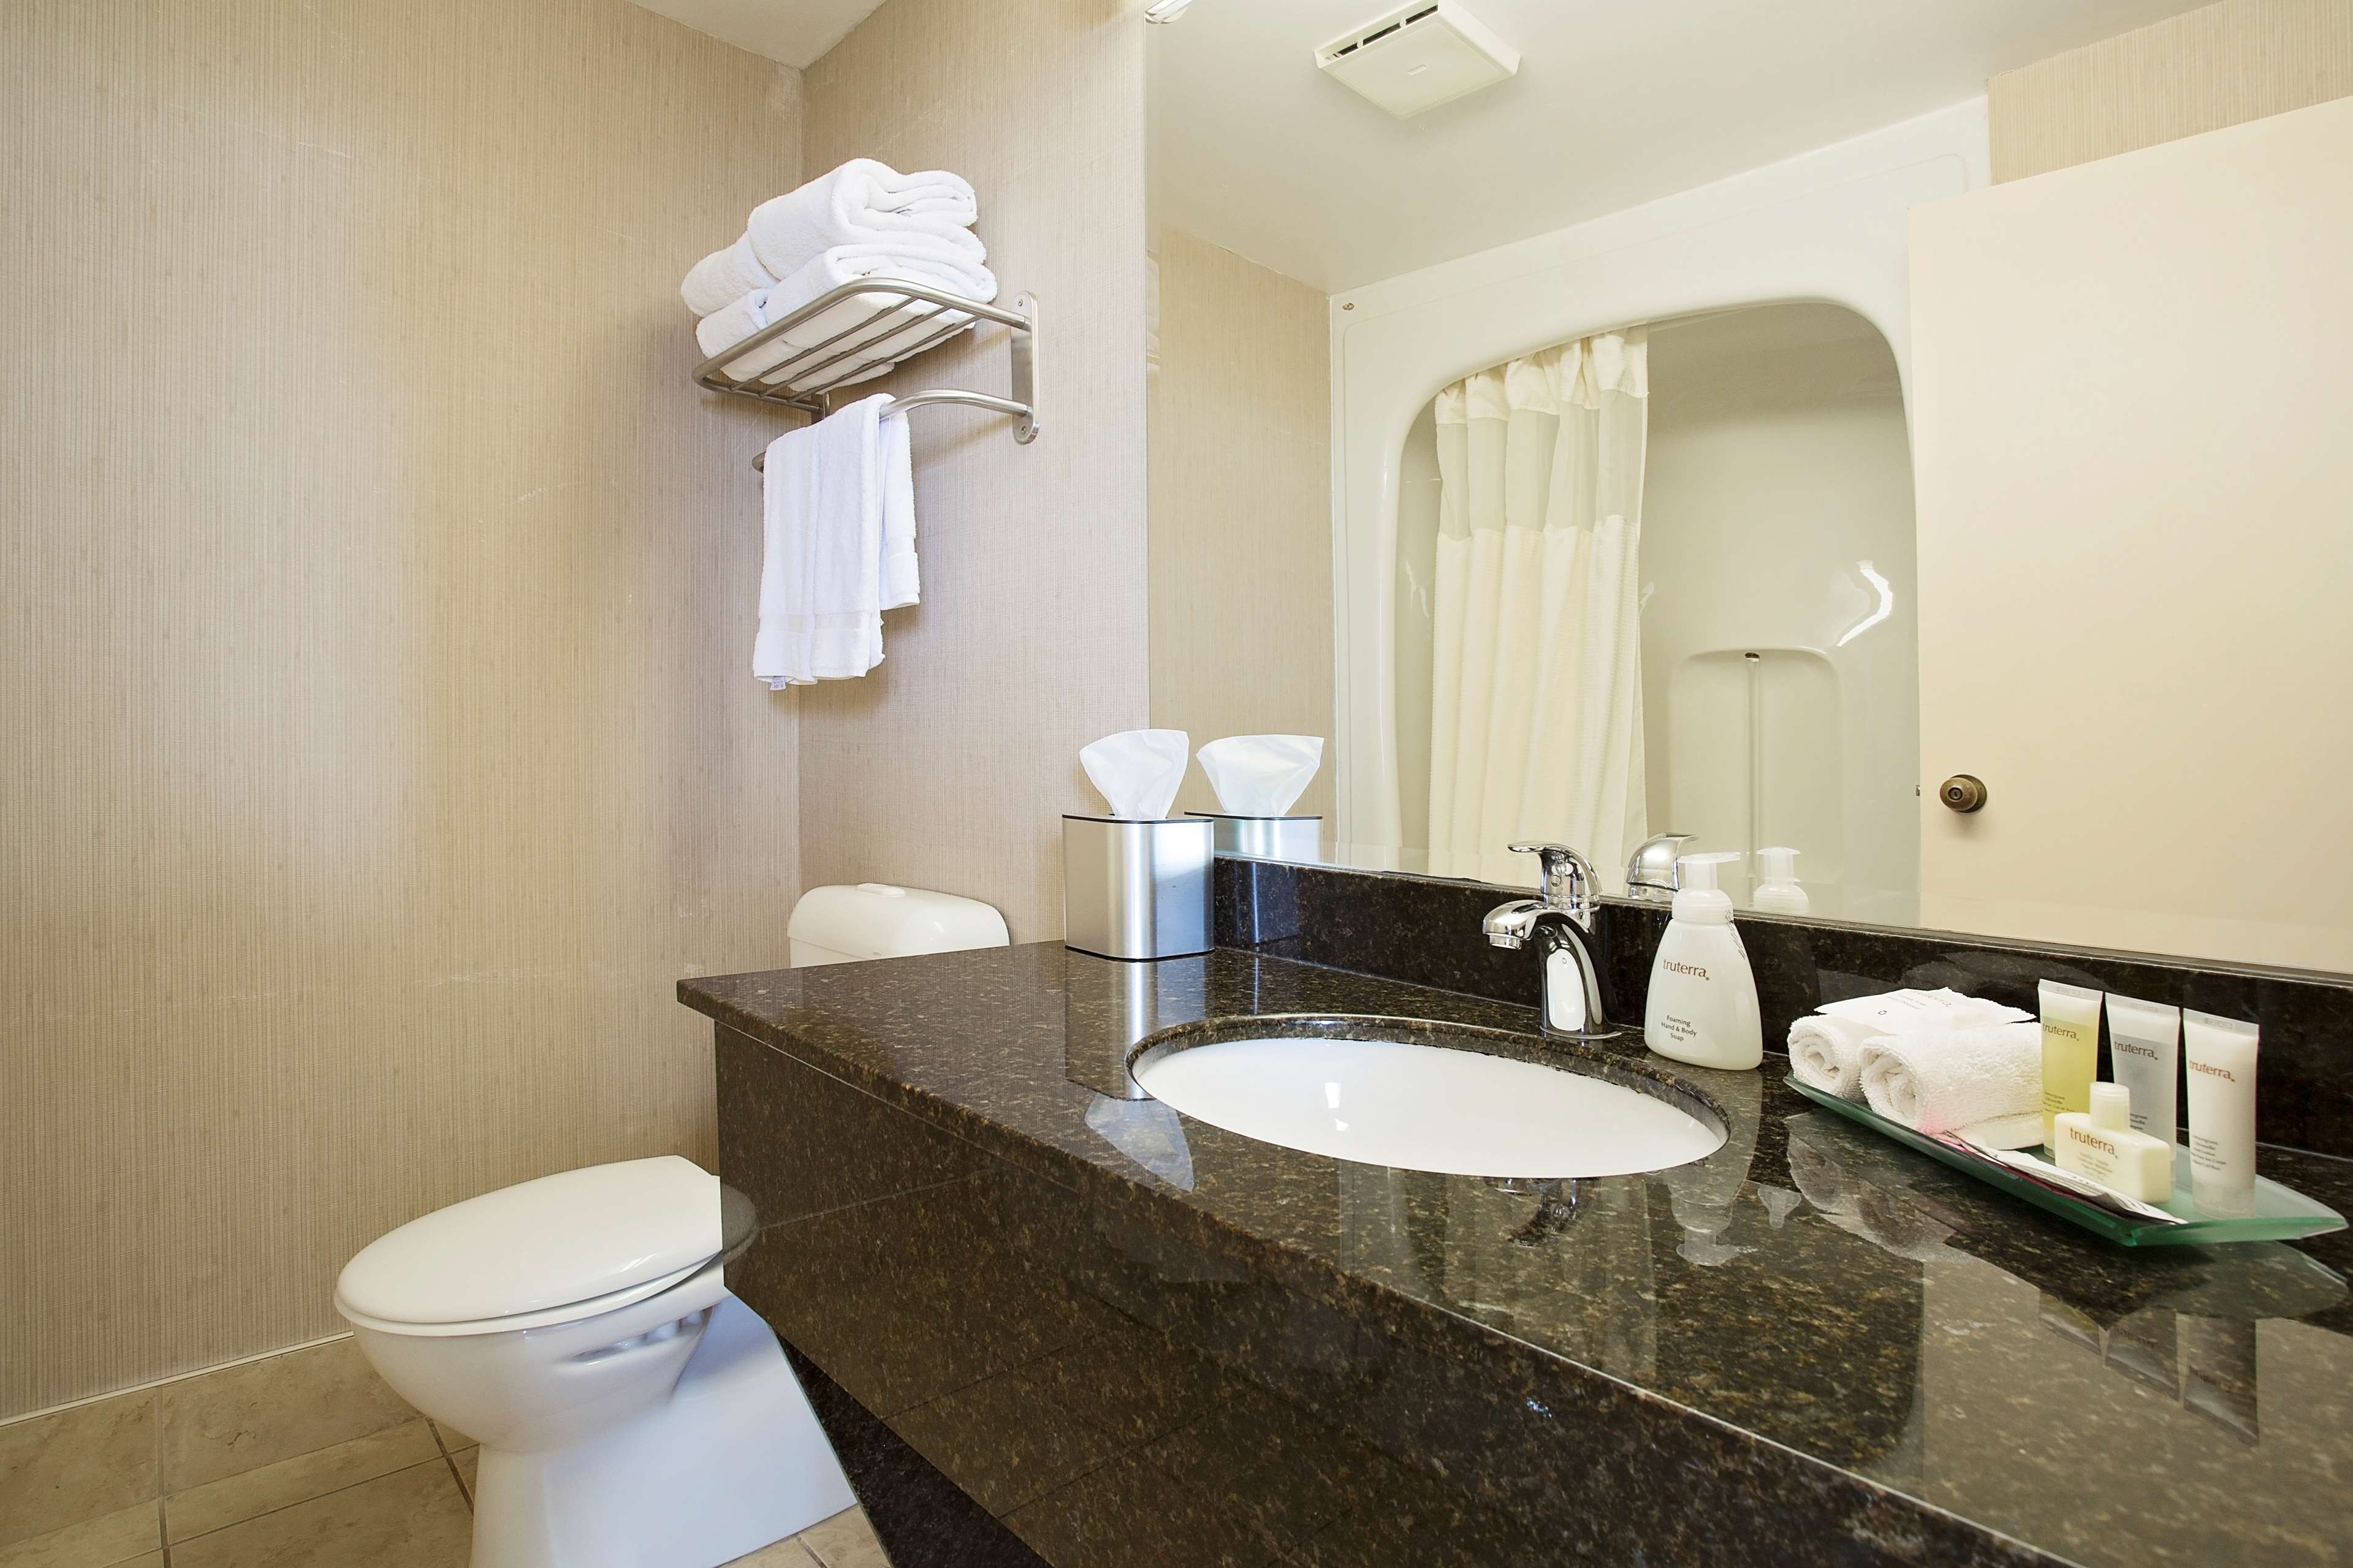 Oversize King View Room Bathroom Best Western Inn On The Bay Owen Sound (519)371-9200